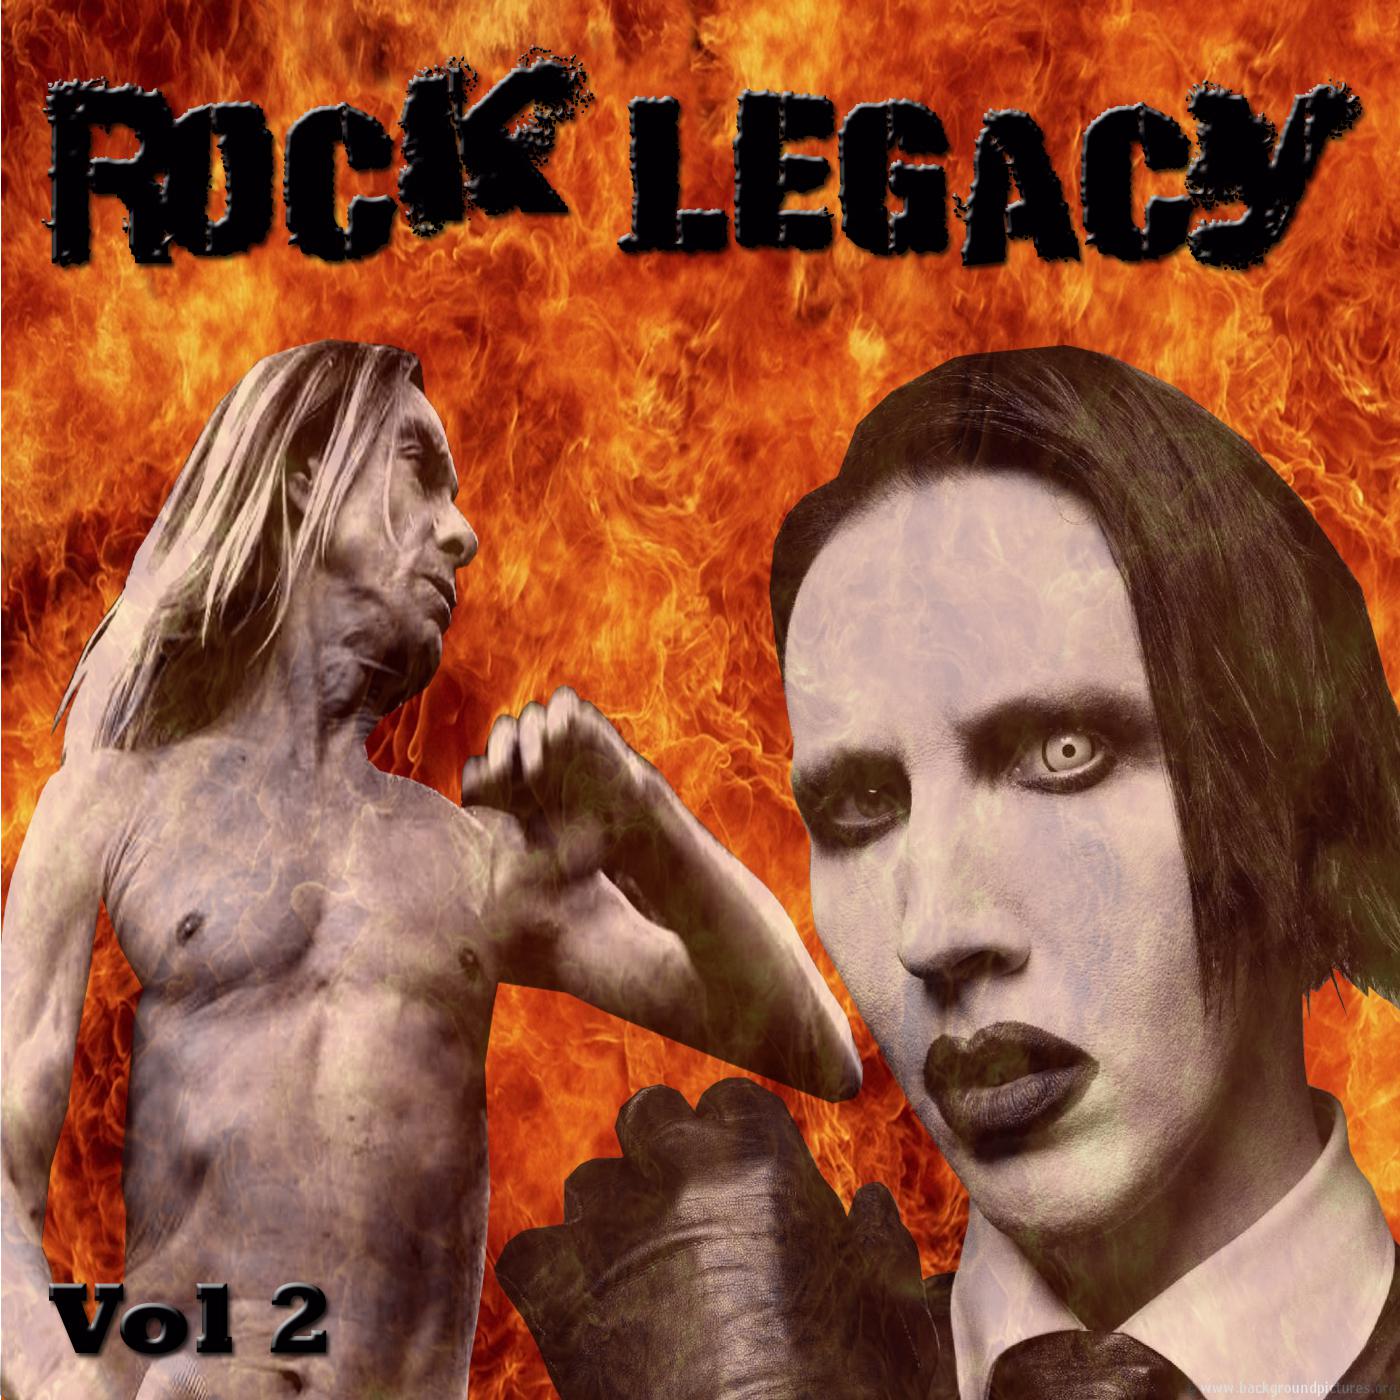 Rock Legacy, Vol. 2专辑